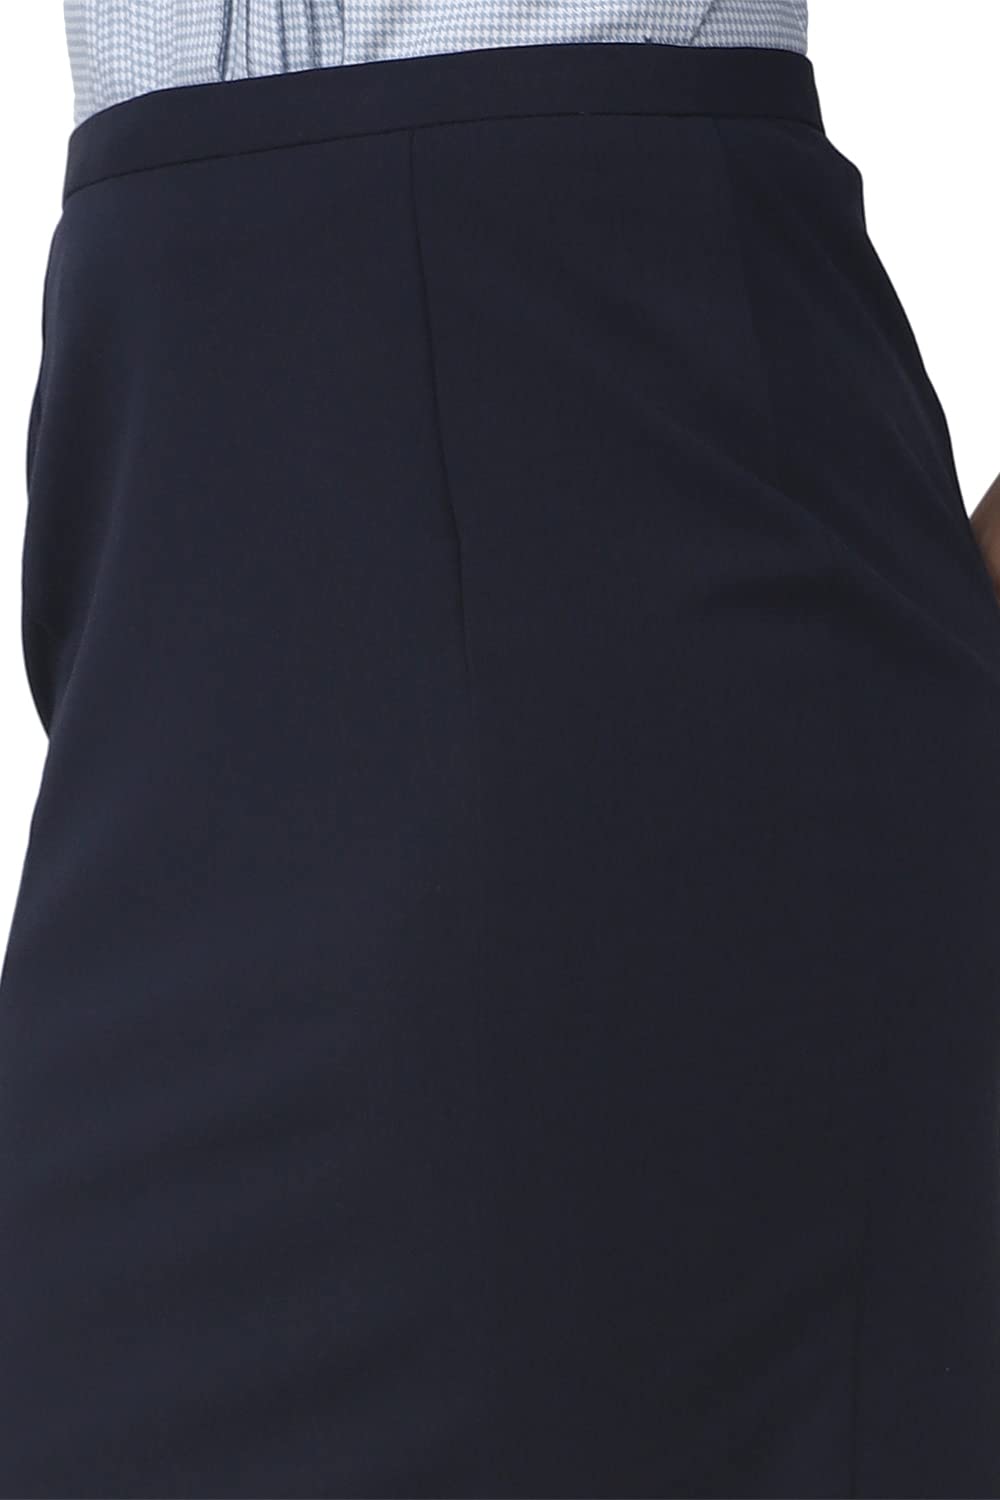 Van Heusen Polyester Blend Western Skirt Navy SaumyasStore